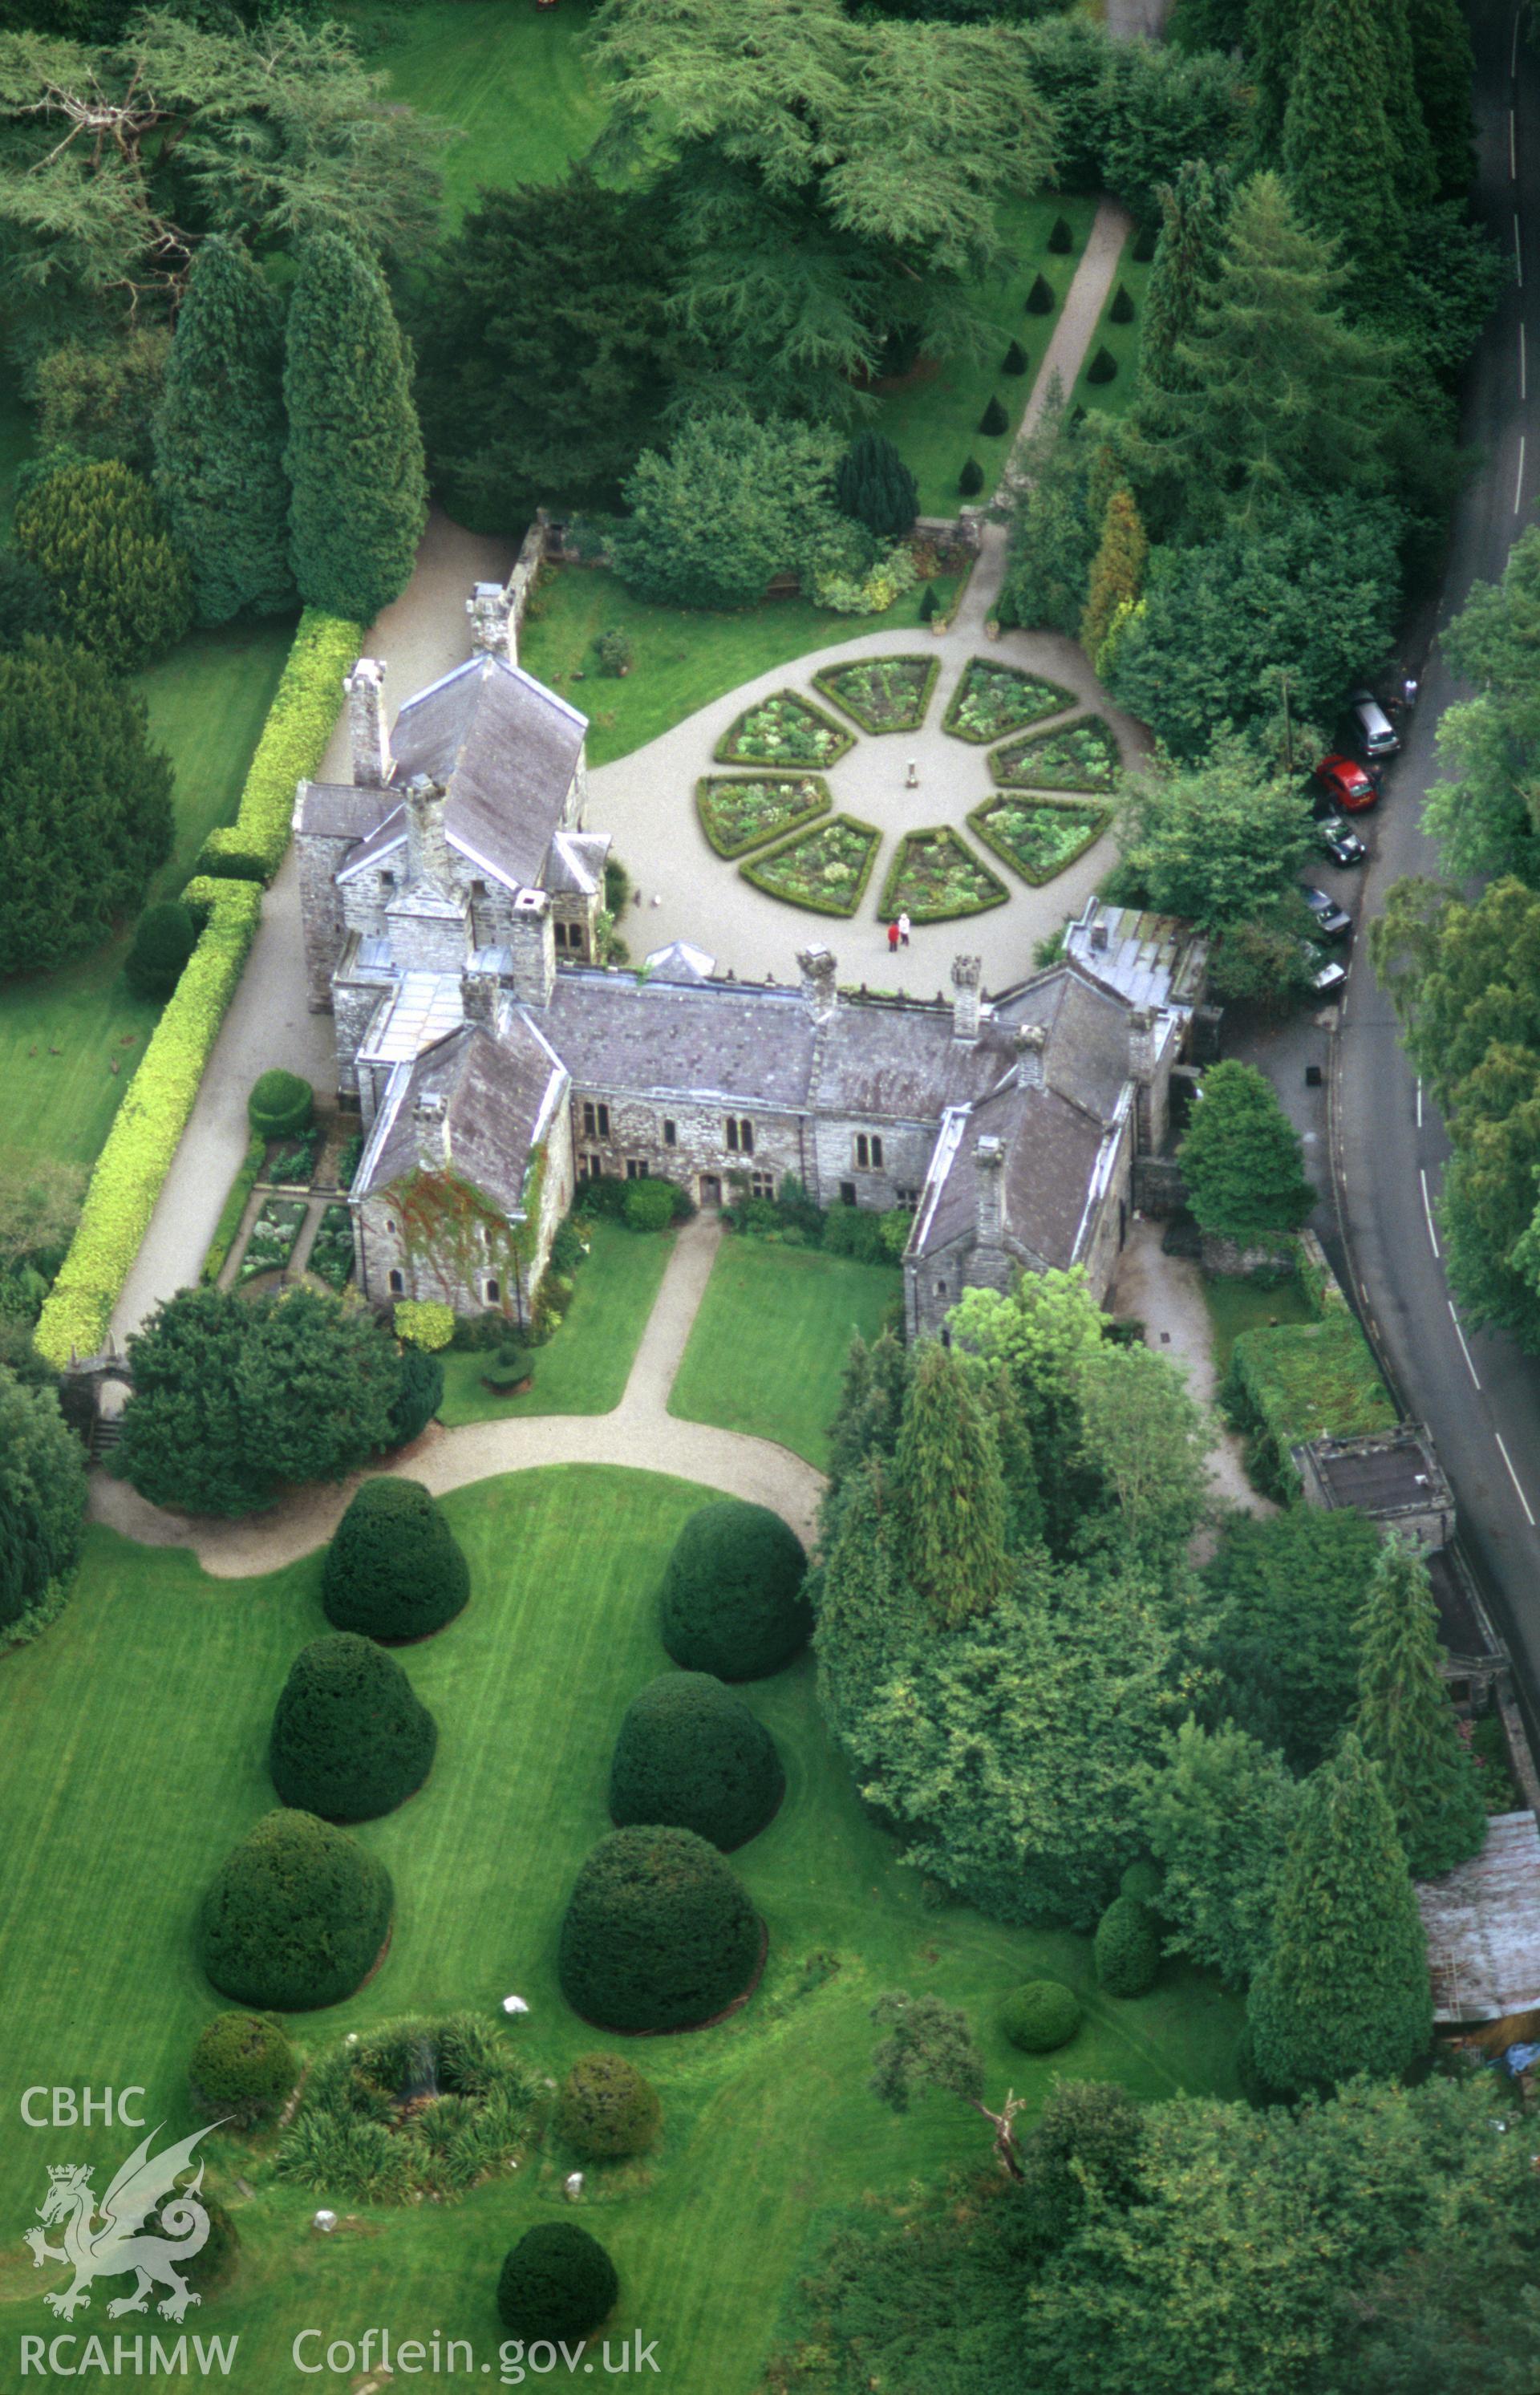 RCAHMW colour oblique aerial photograph showing Gwydir Castle, Trefriw, taken by Toby Driver 2004.